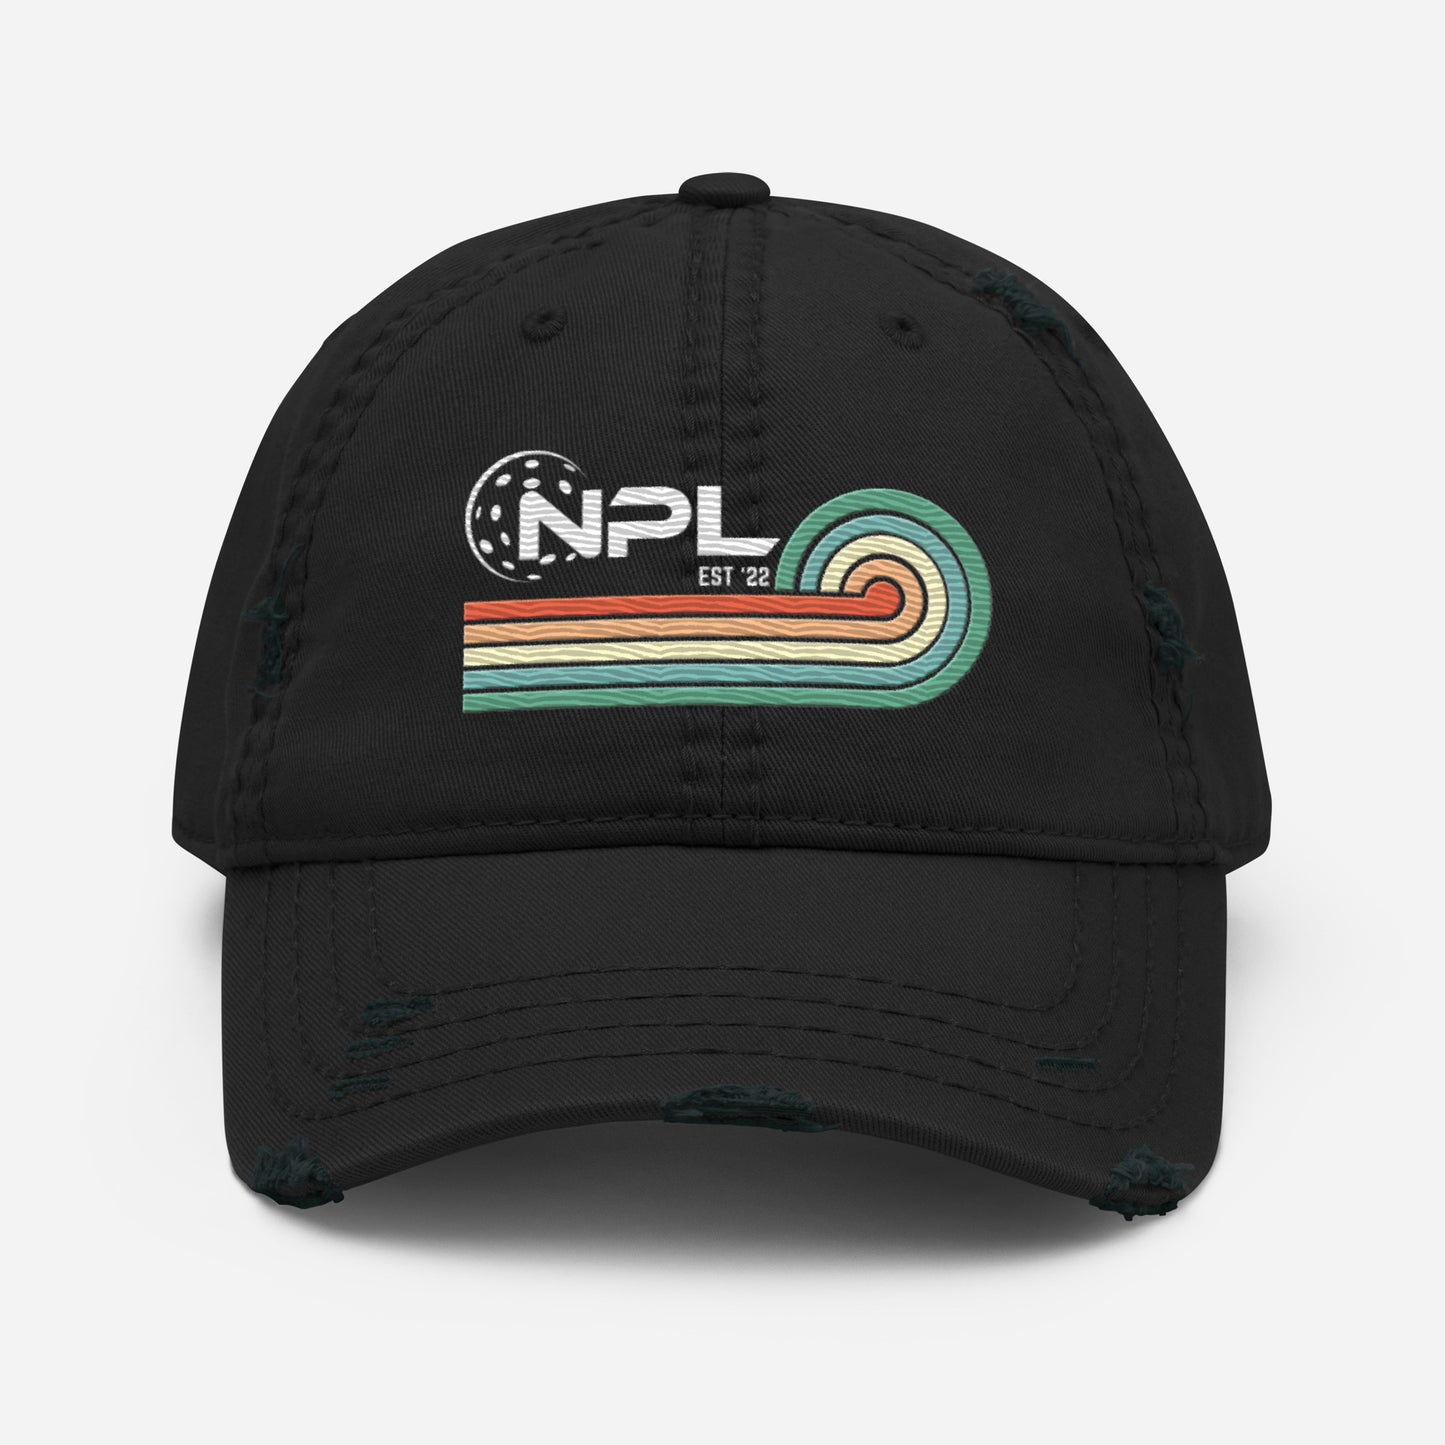 NPL Retro Distressed Beachy Hat